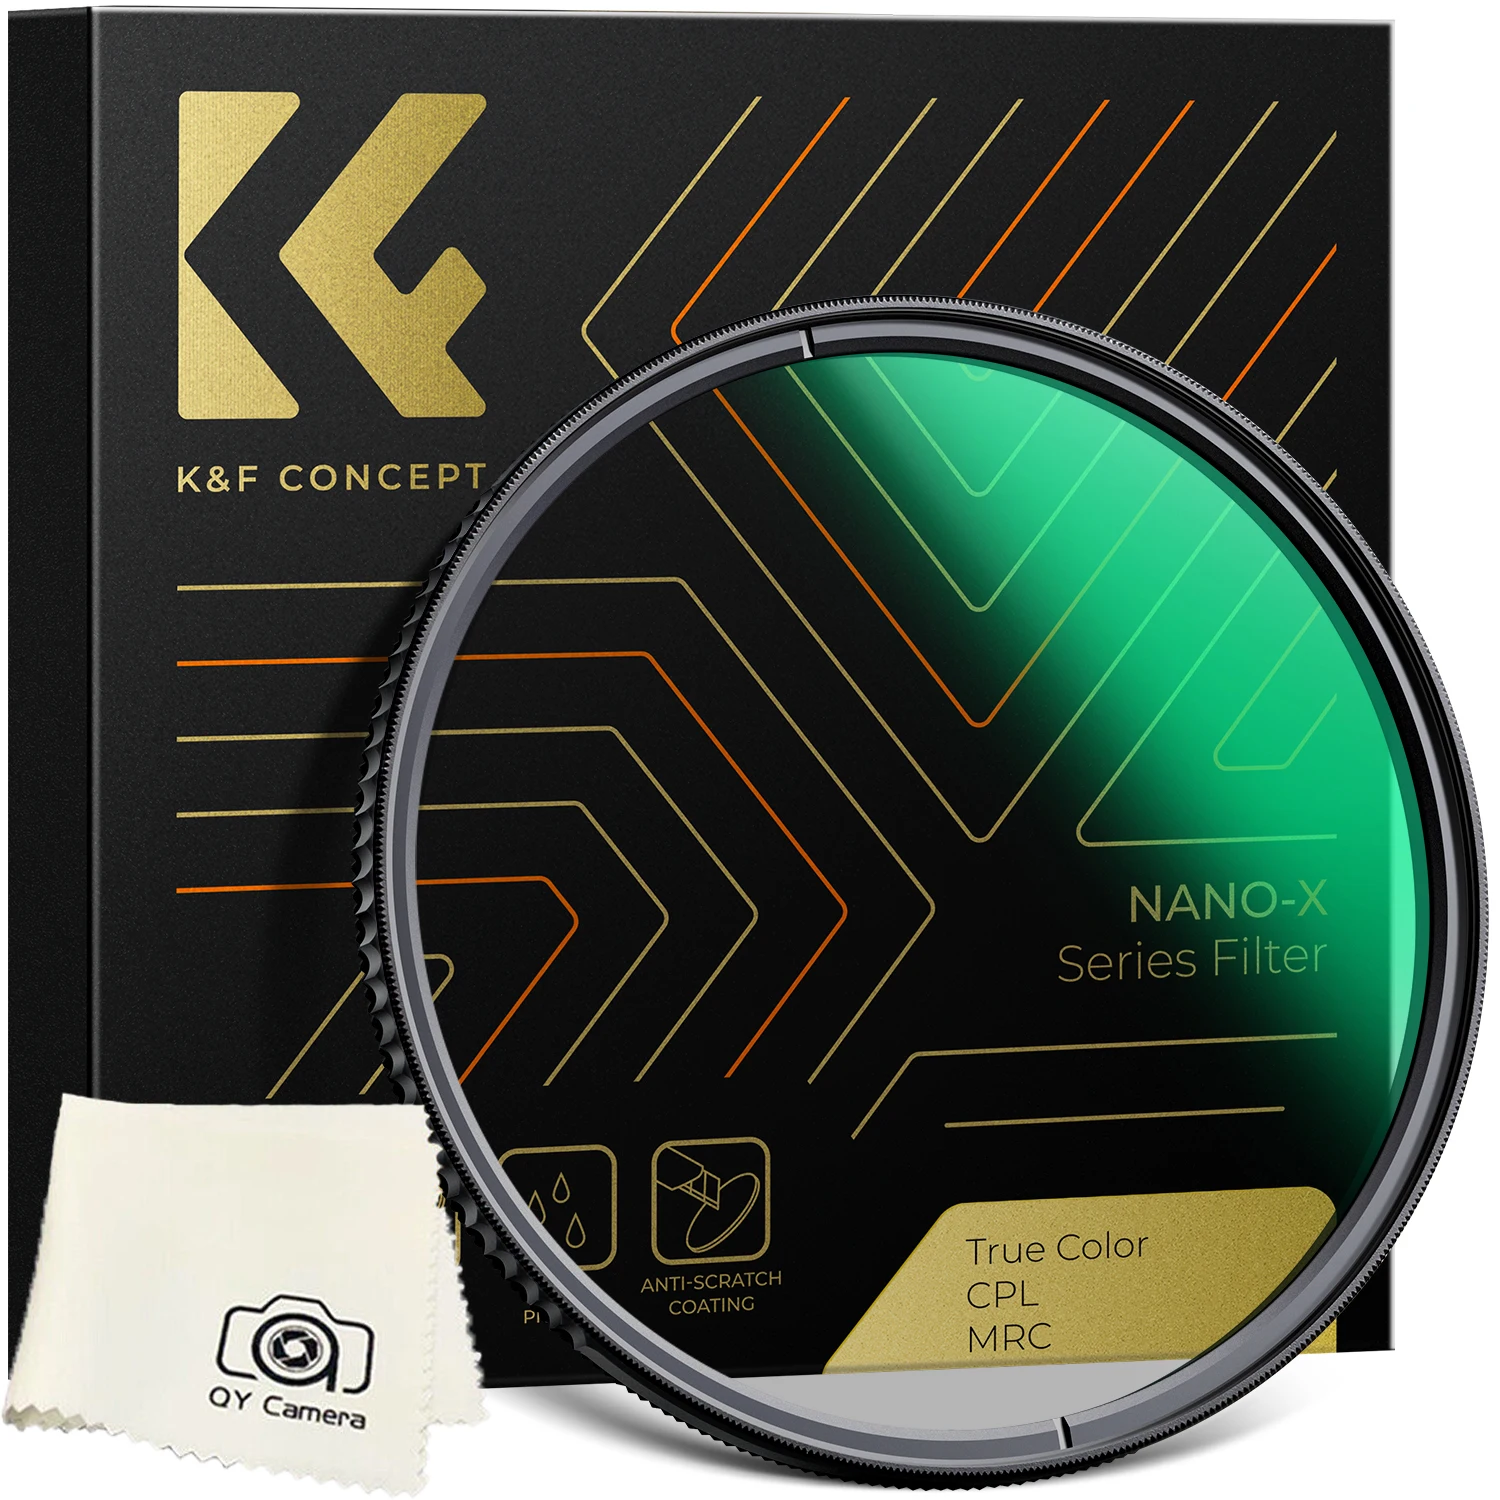 

K&F Concept 67mm True Color CPL Filter 58mm 82mm Color Fidelity Circular Polarizer Filter NANO-X 49mm 52mm 55mm 77mm 62mm 72mm